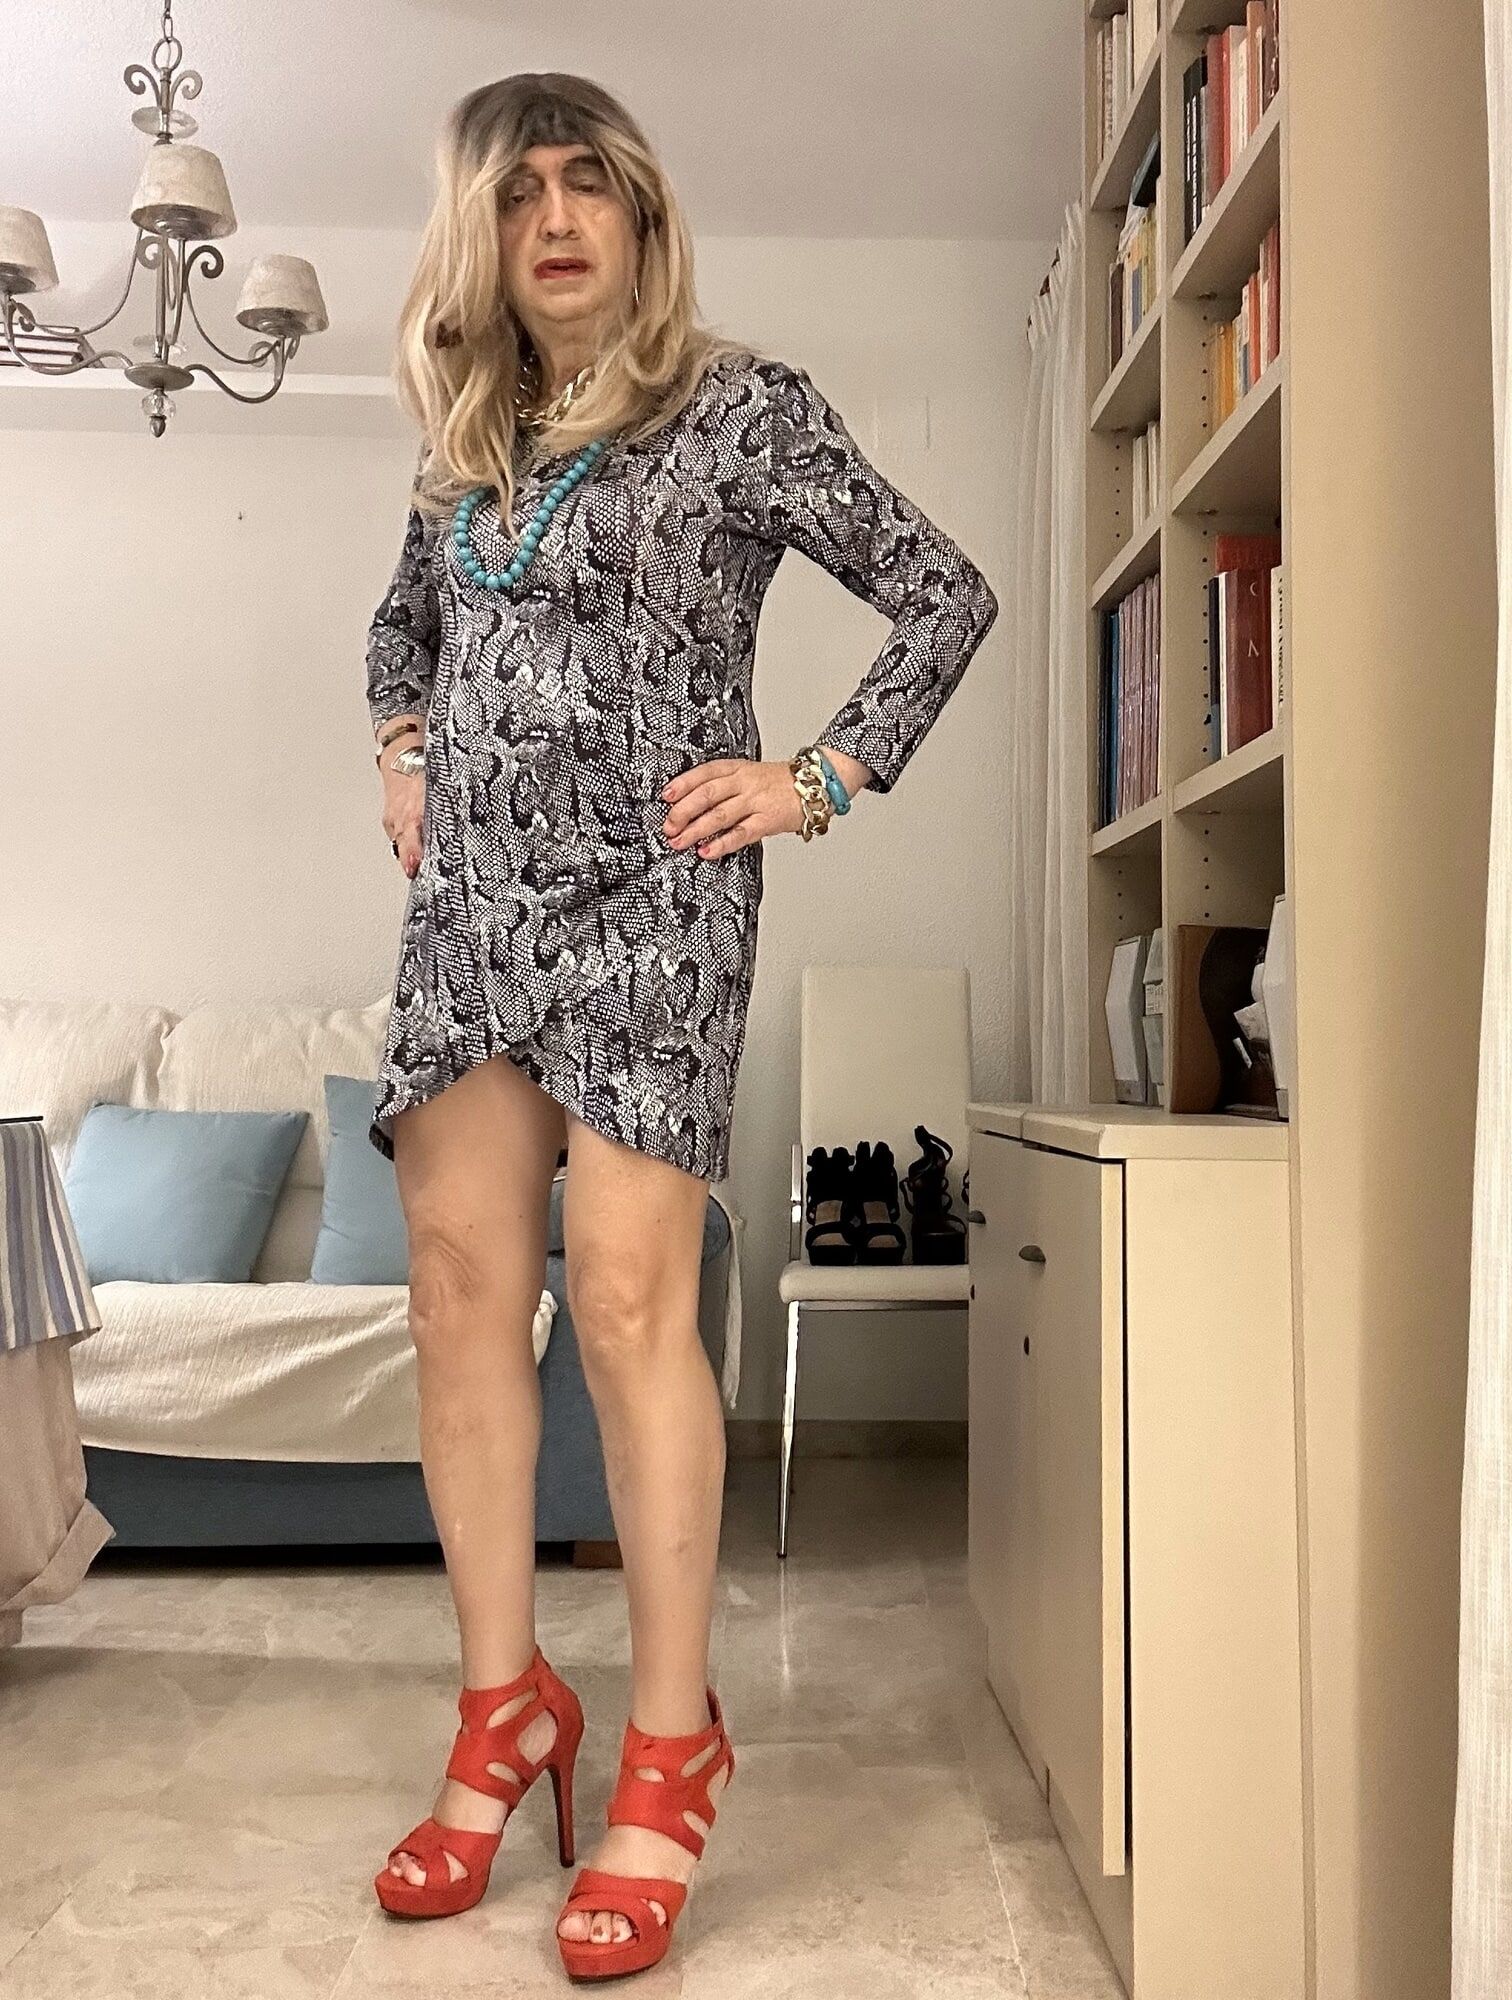 Daniela Monroe Spanish TV, snake dress, red high heels #3